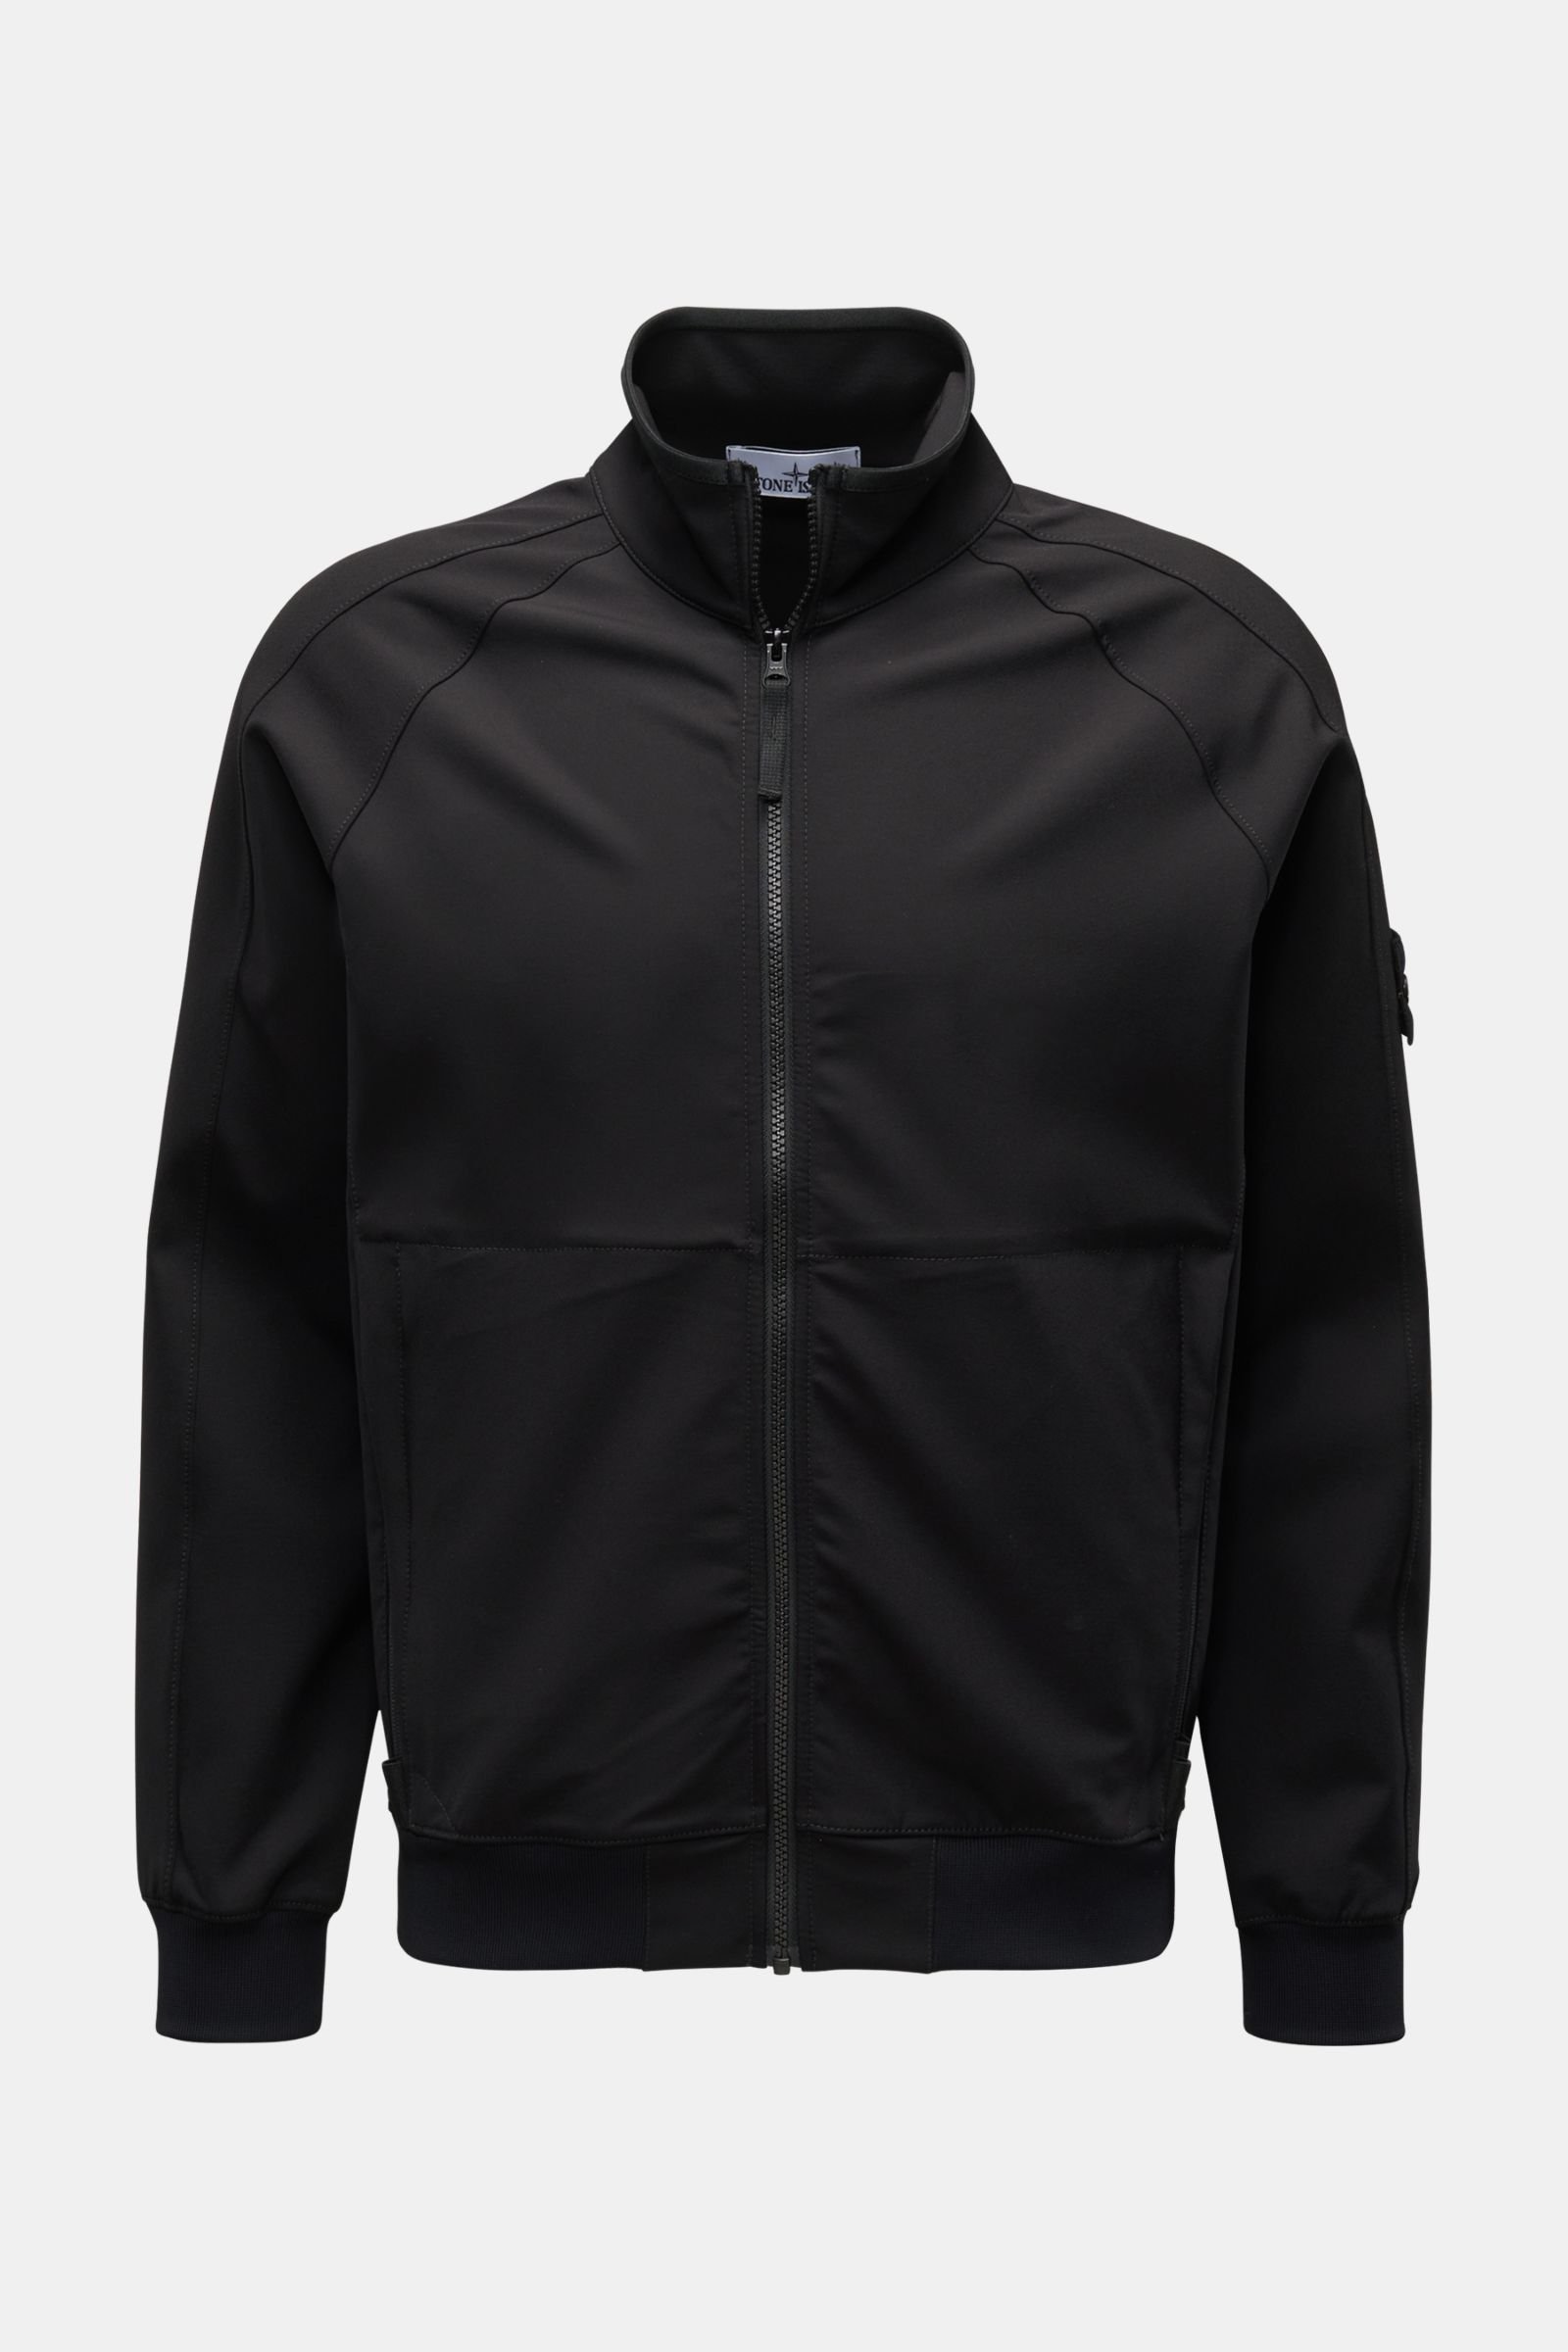 Sweat jacket black